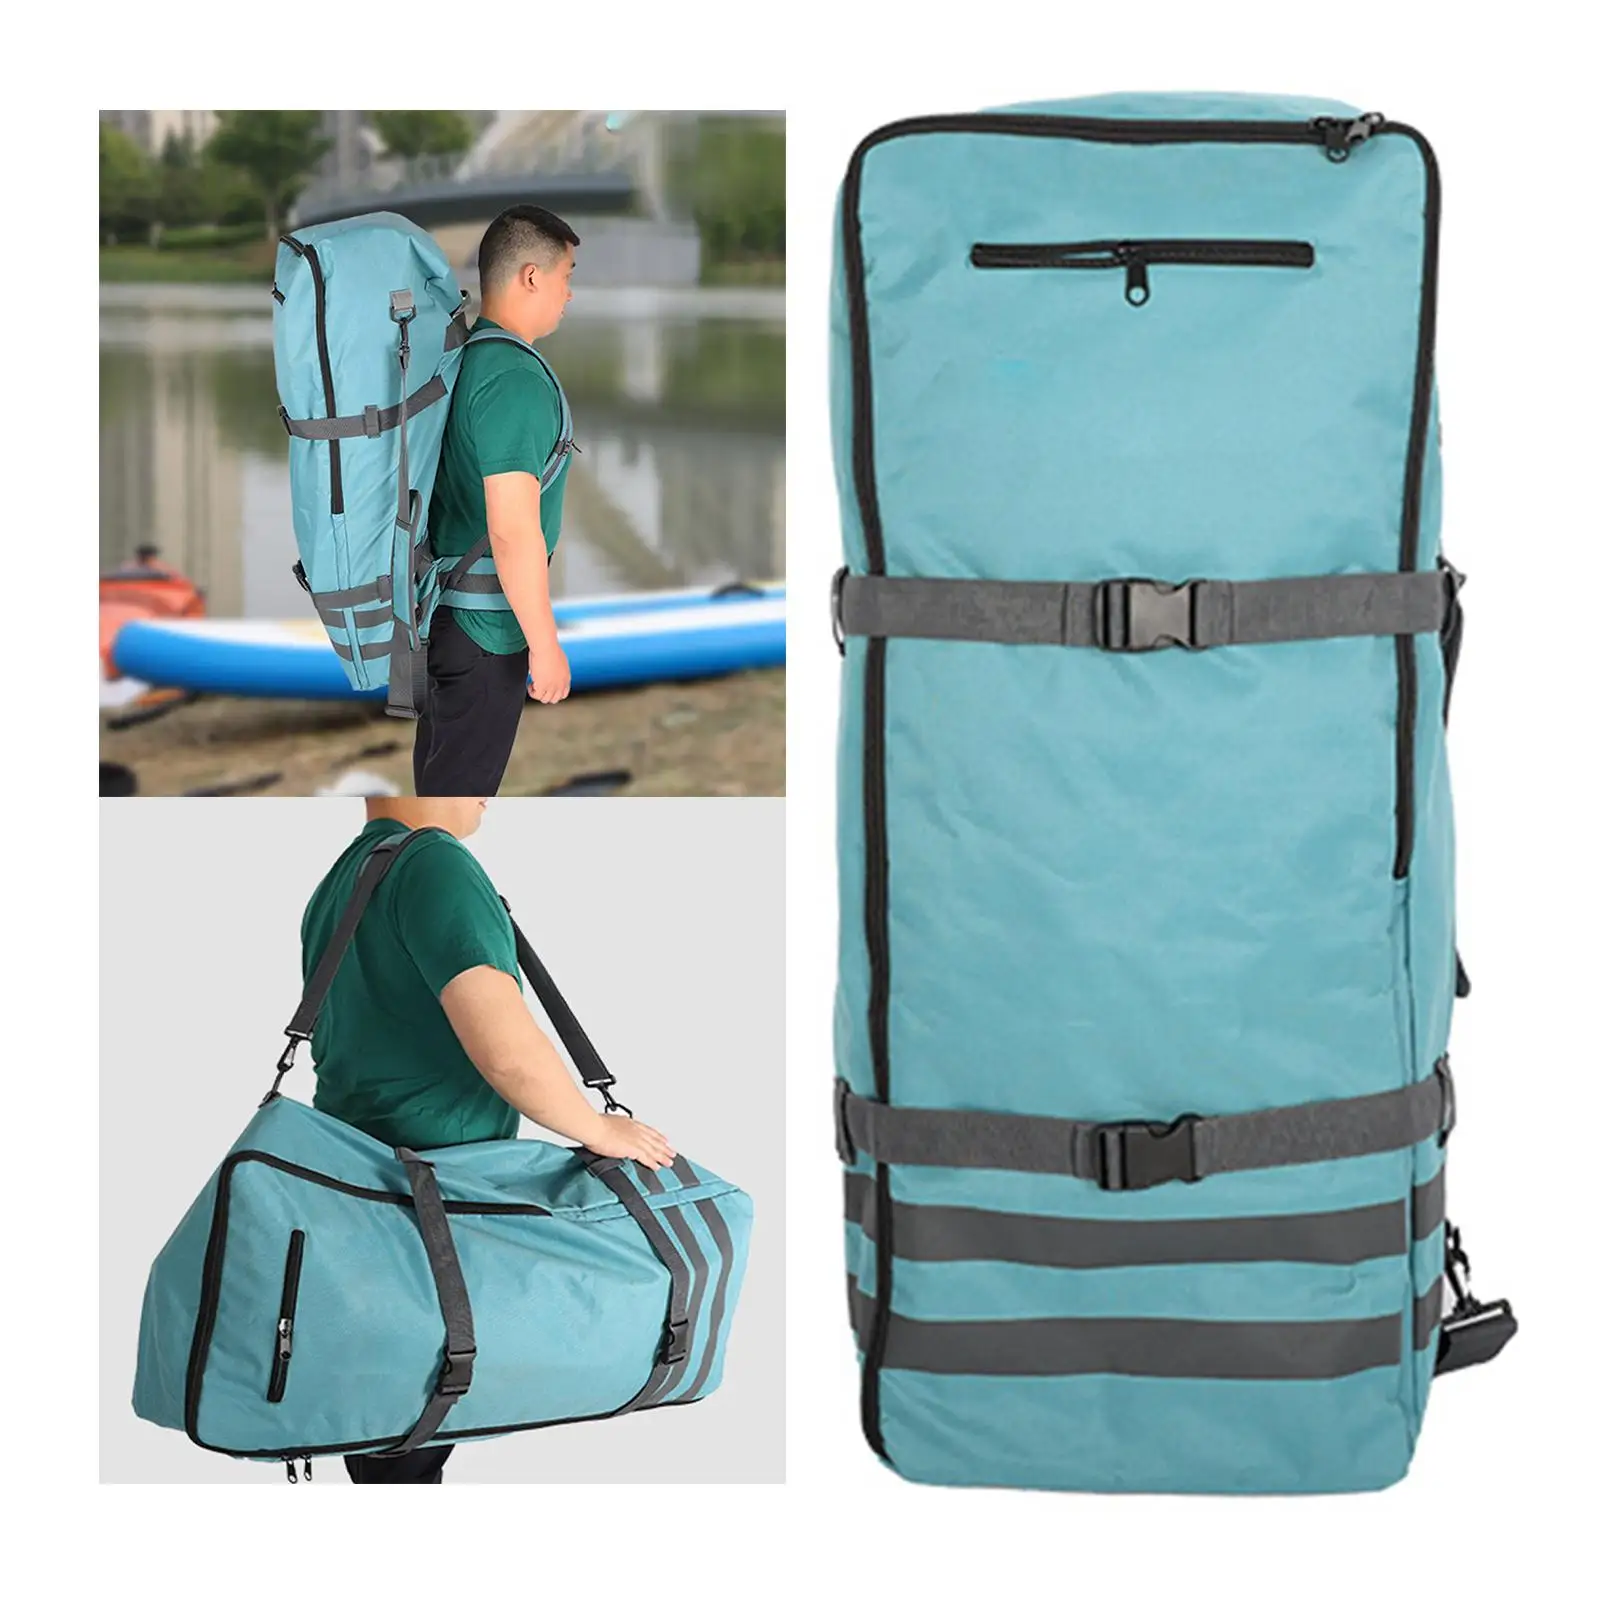 Inflatable Paddleboard Backpack Handbag Stand up Paddle Board Travel Bag